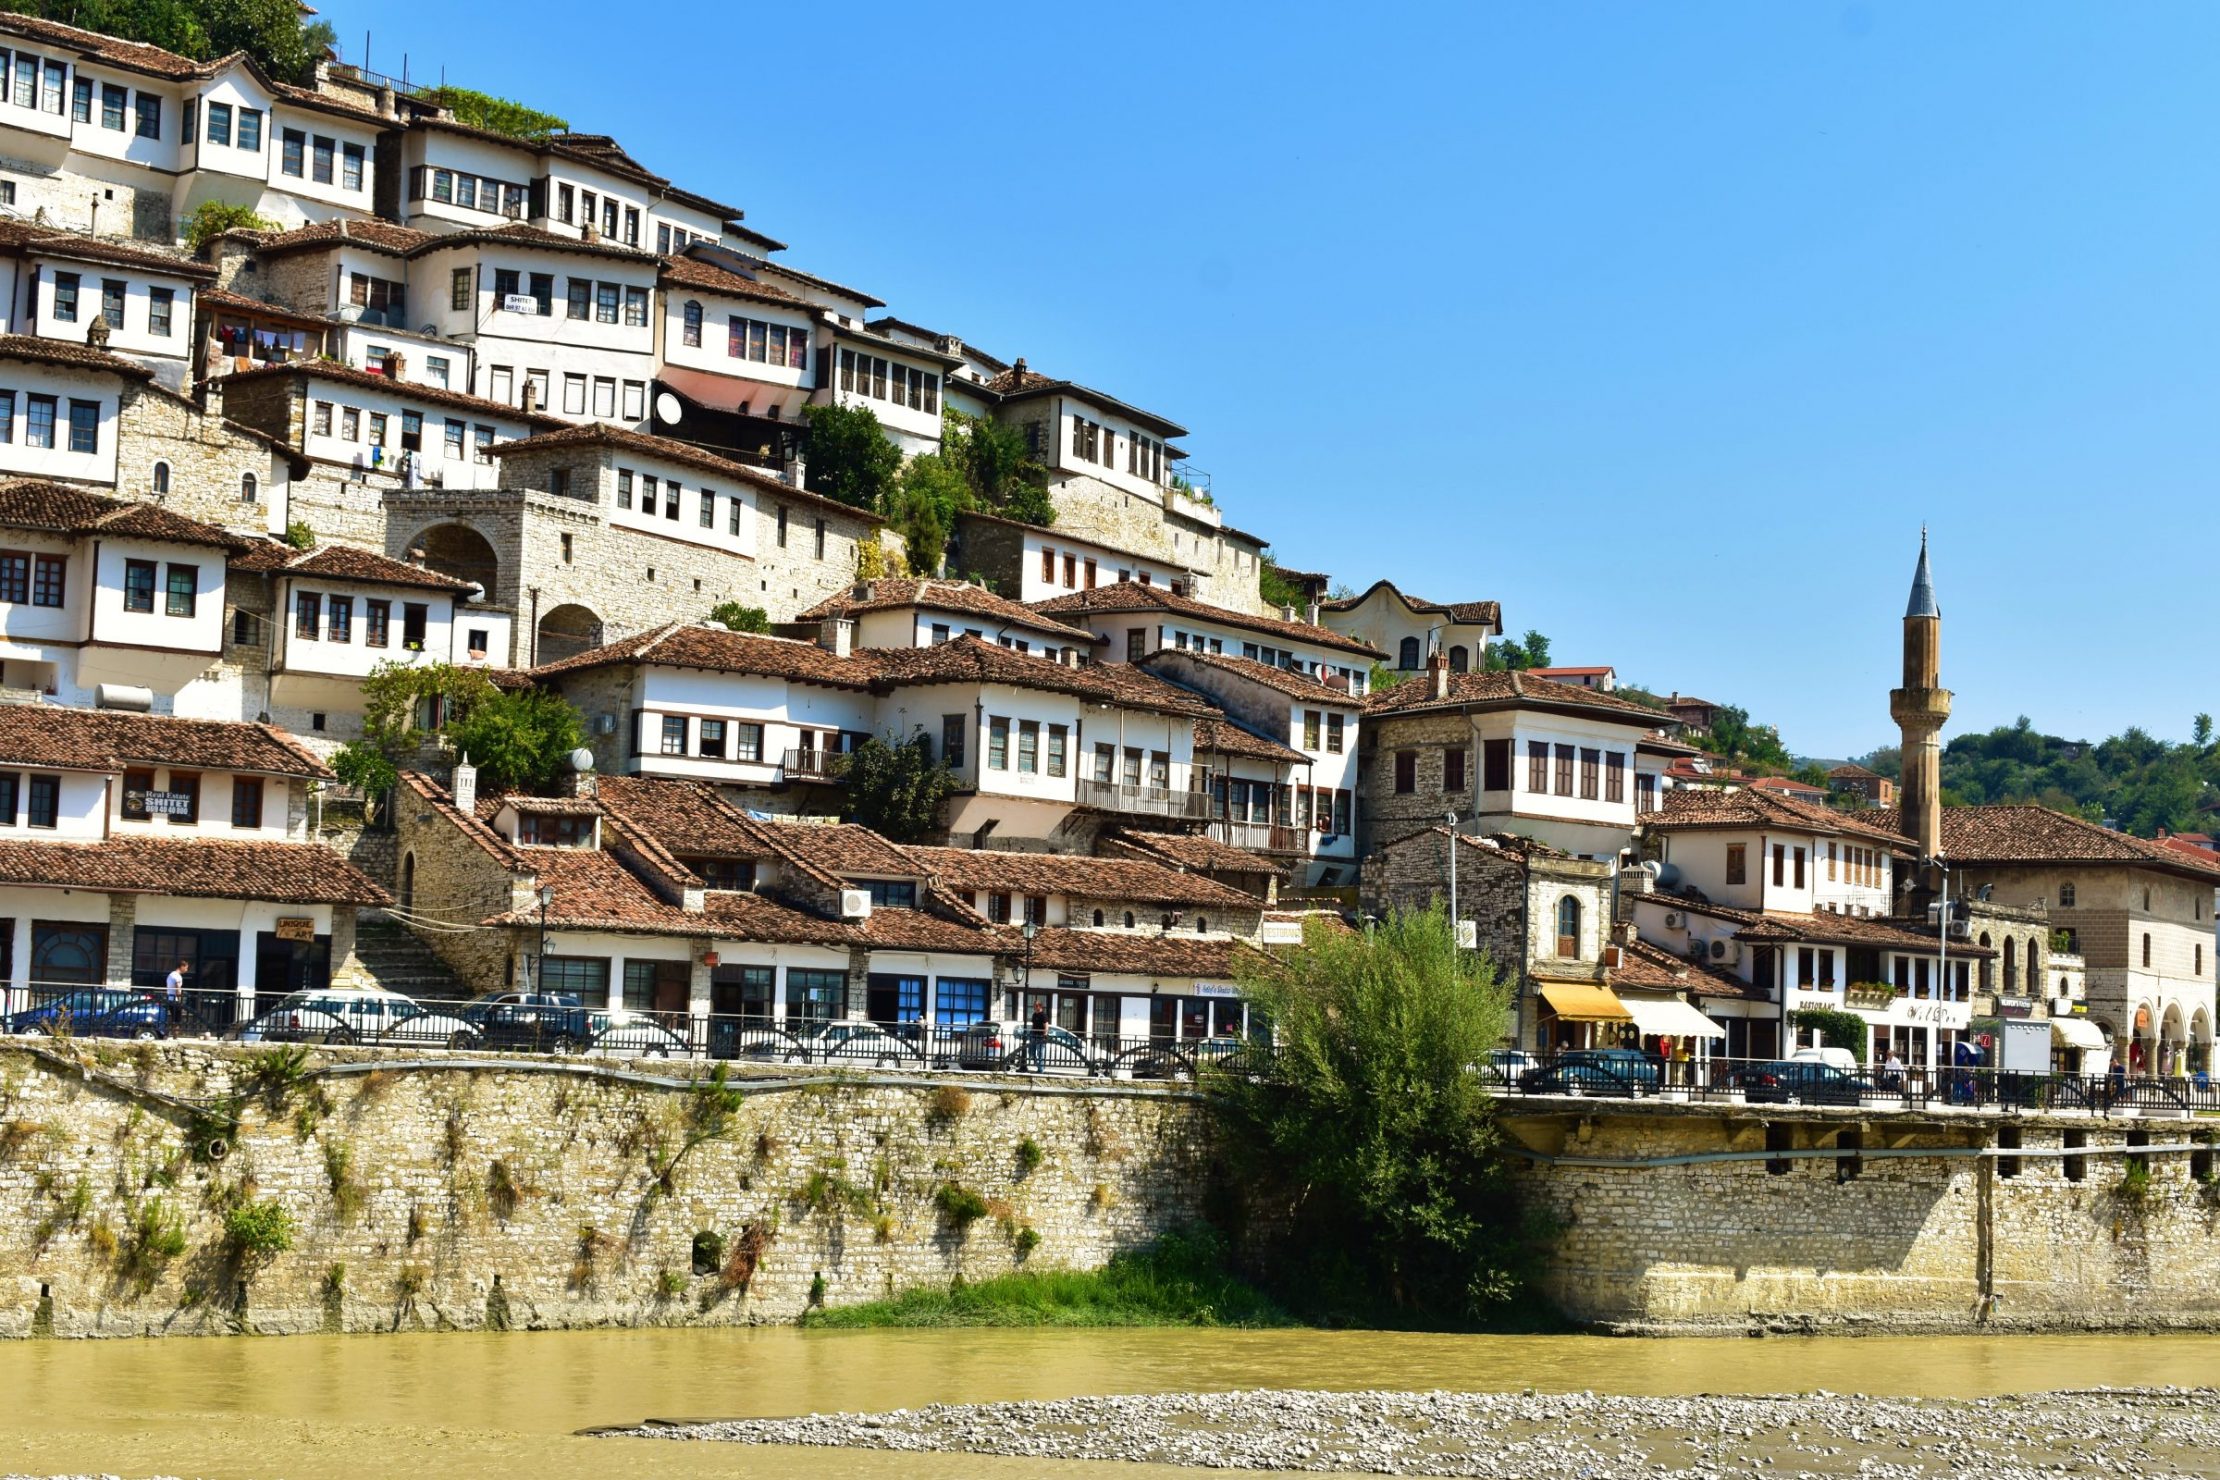 Ottoman houses in Berat, Albania